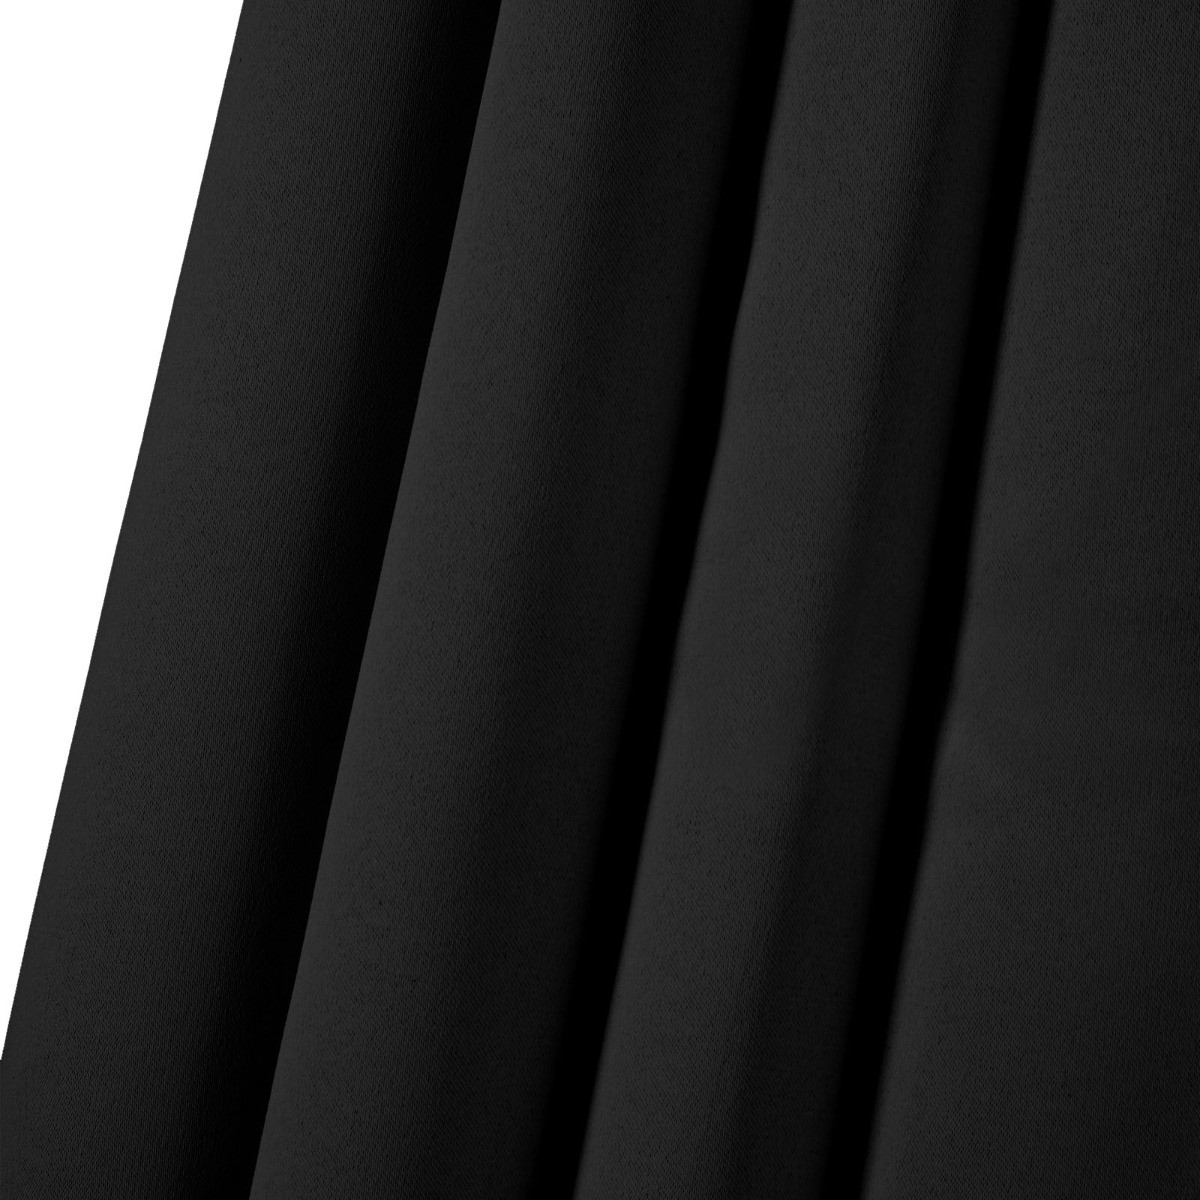 Dreamscene Pencil Pleat Thermal Blackout Curtains - Black, 46" x 72">